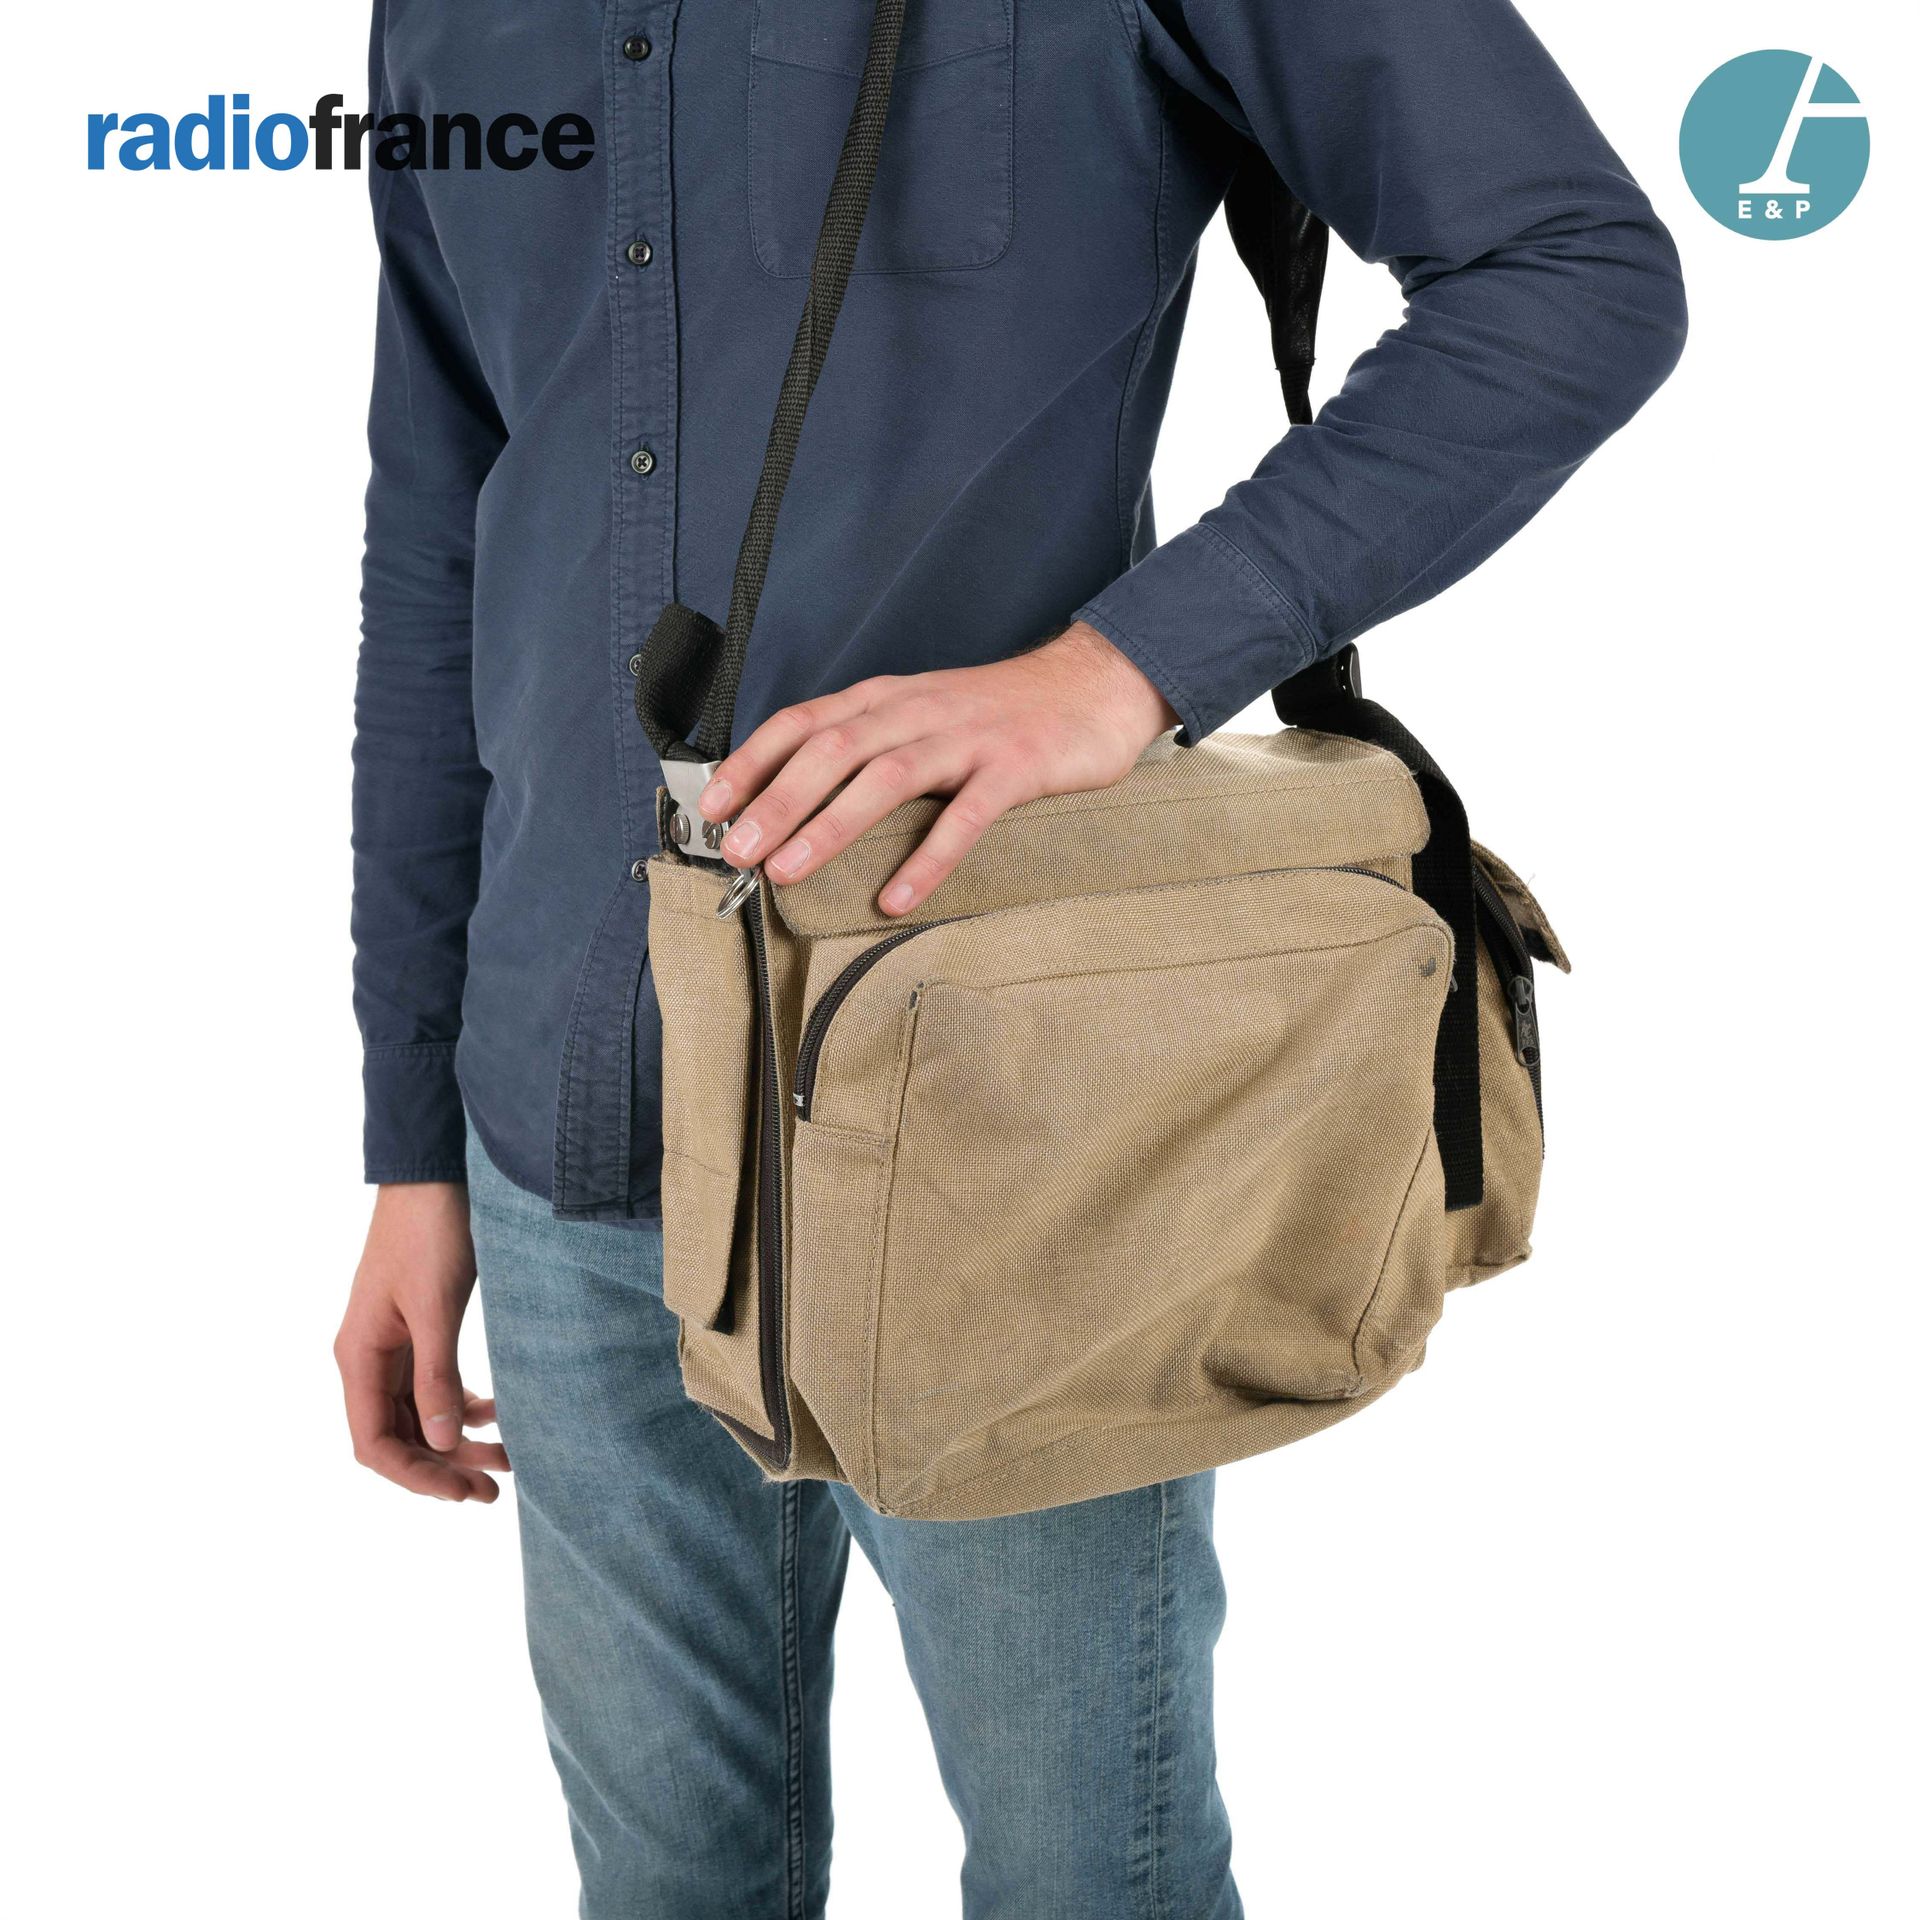 Null NAGRA数字录音机，Ares-C，带有法国广播电台标志的原始黑色布袋。

包括话筒、话筒线和France Bleu防风罩。

来自法蓝巴约纳

高：&hellip;